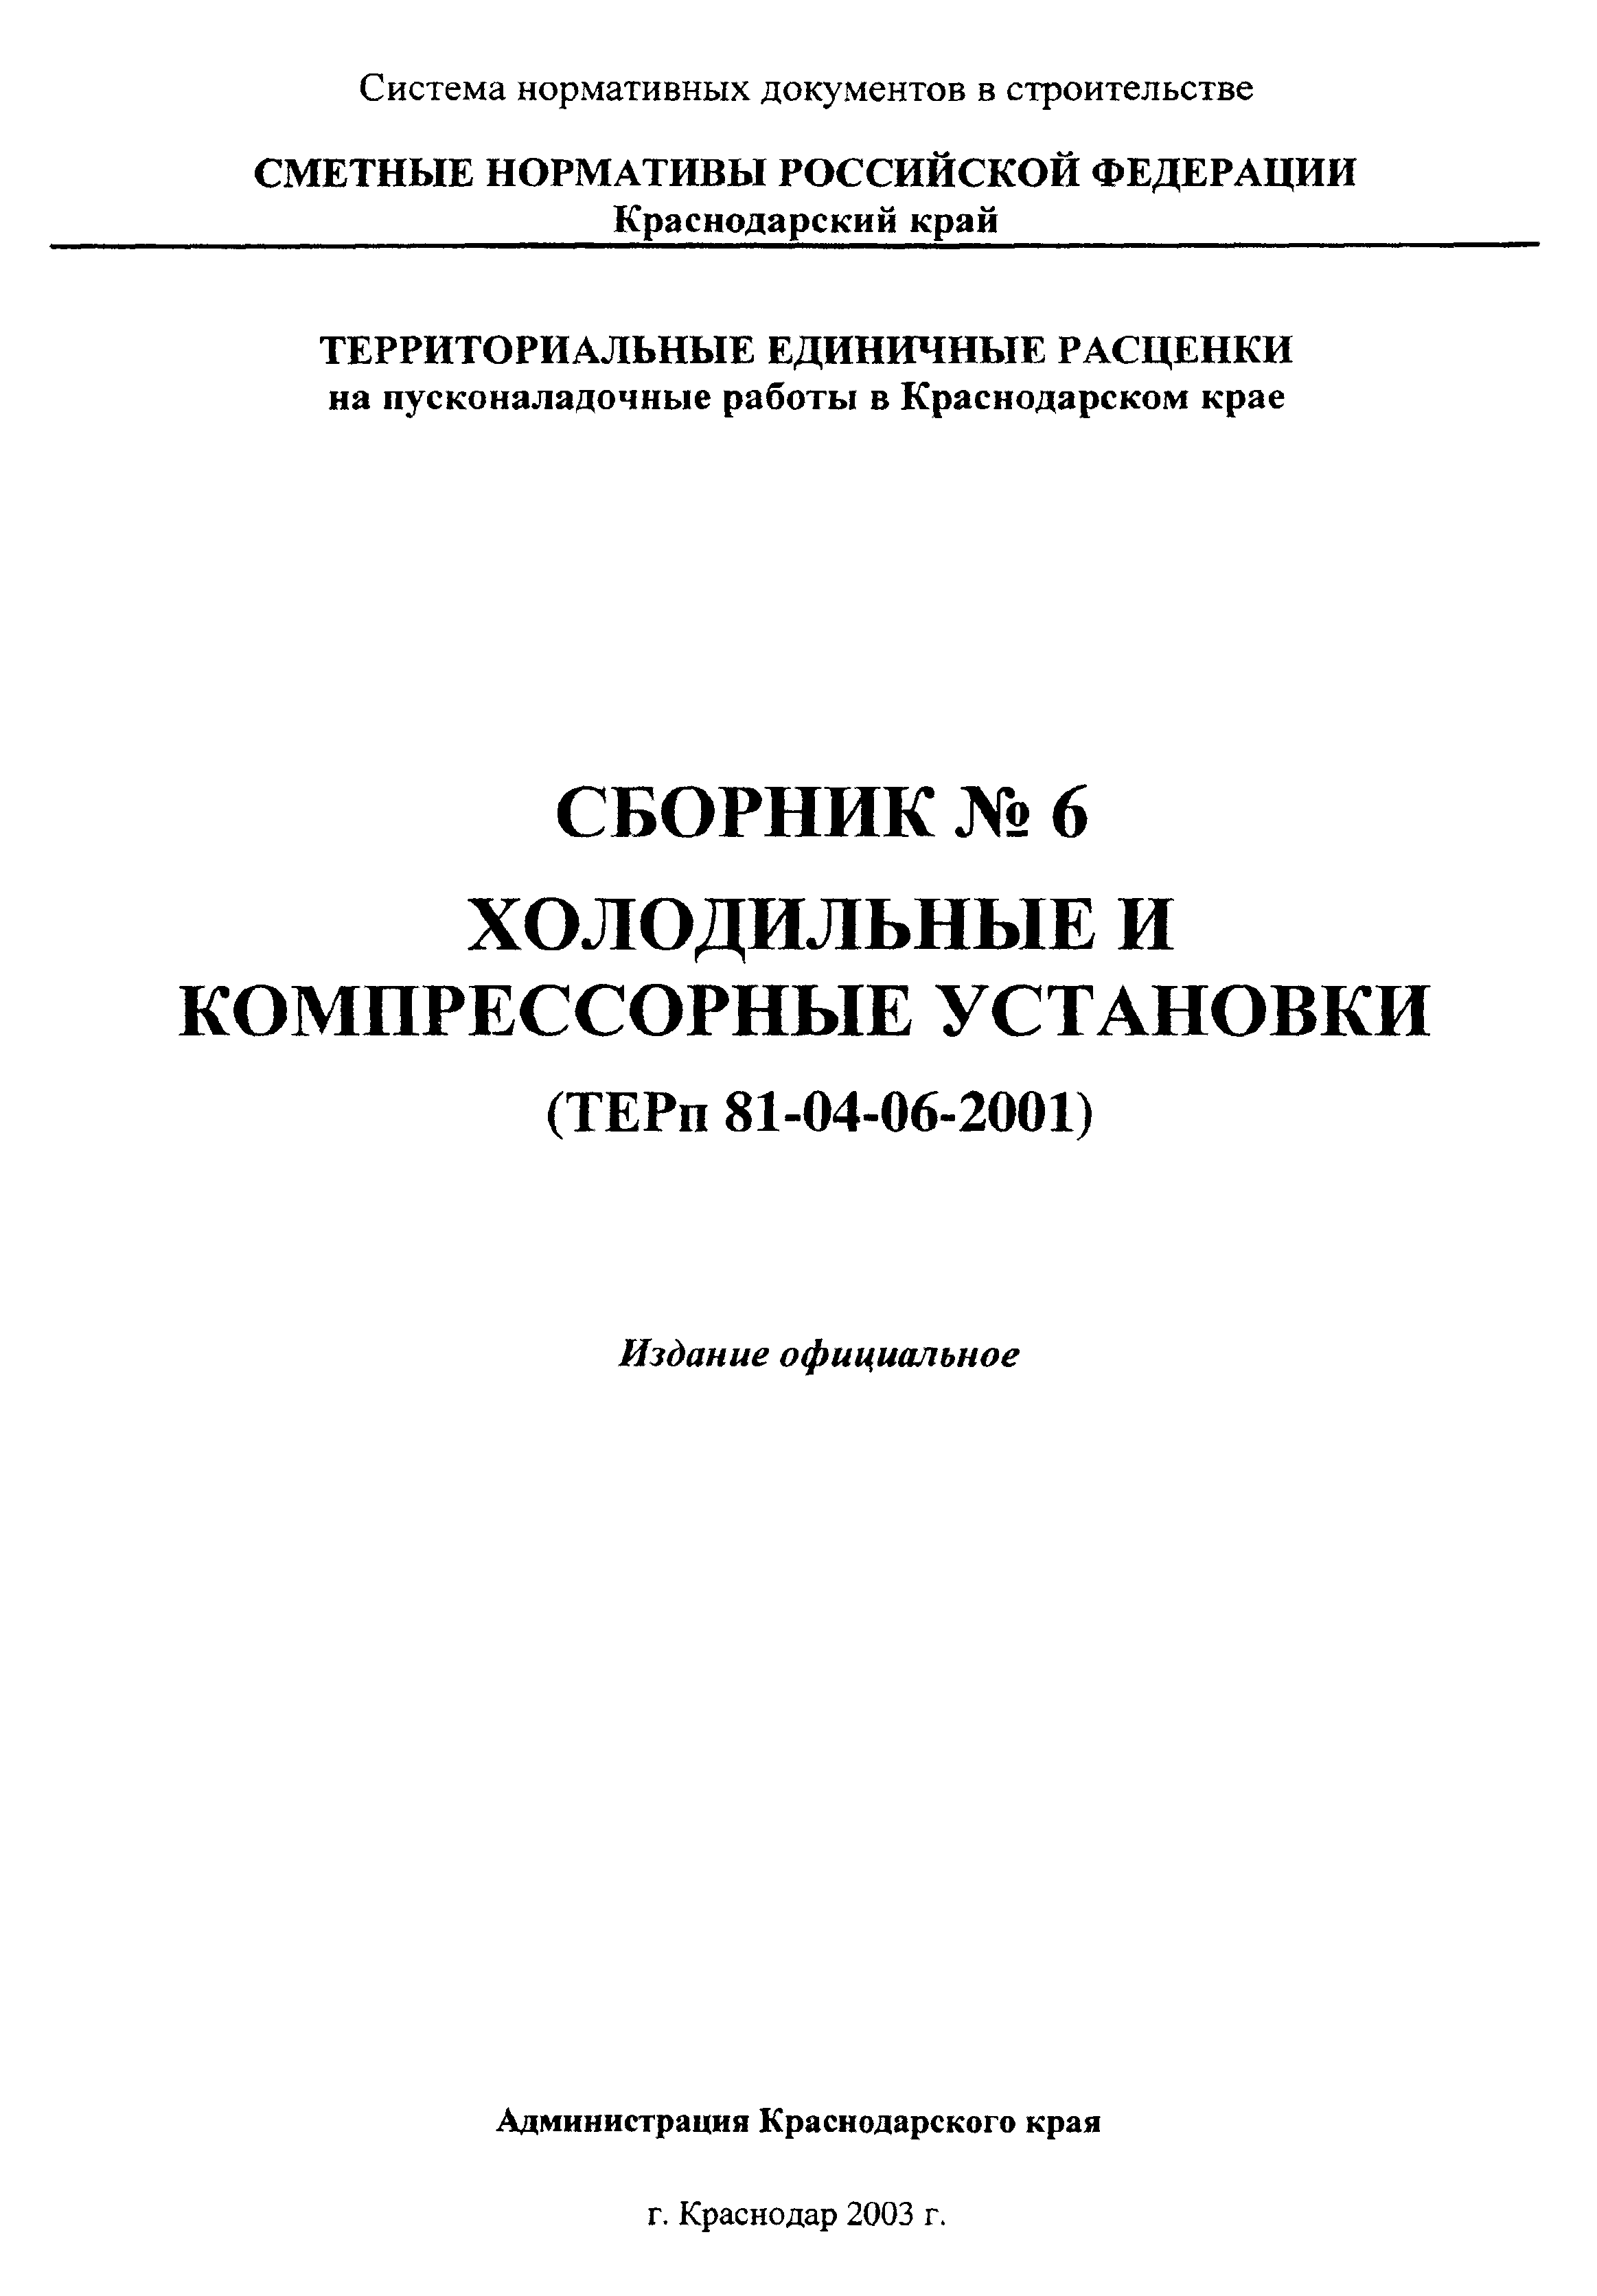 ТЕРп Краснодарского края 2001-06